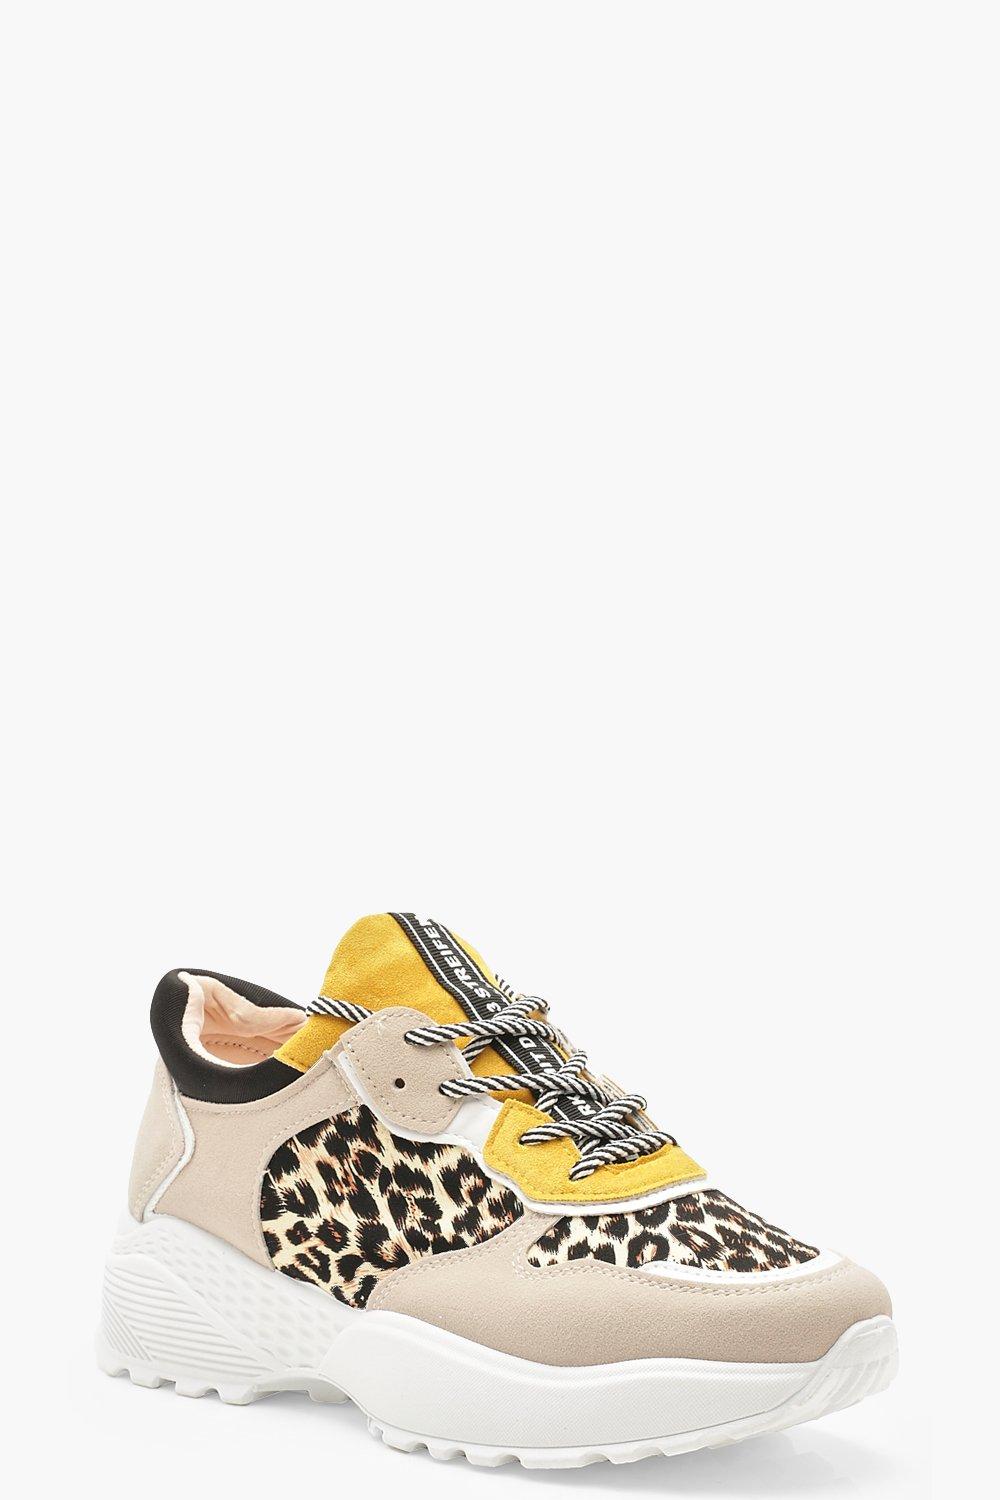 leopard sneakers canada